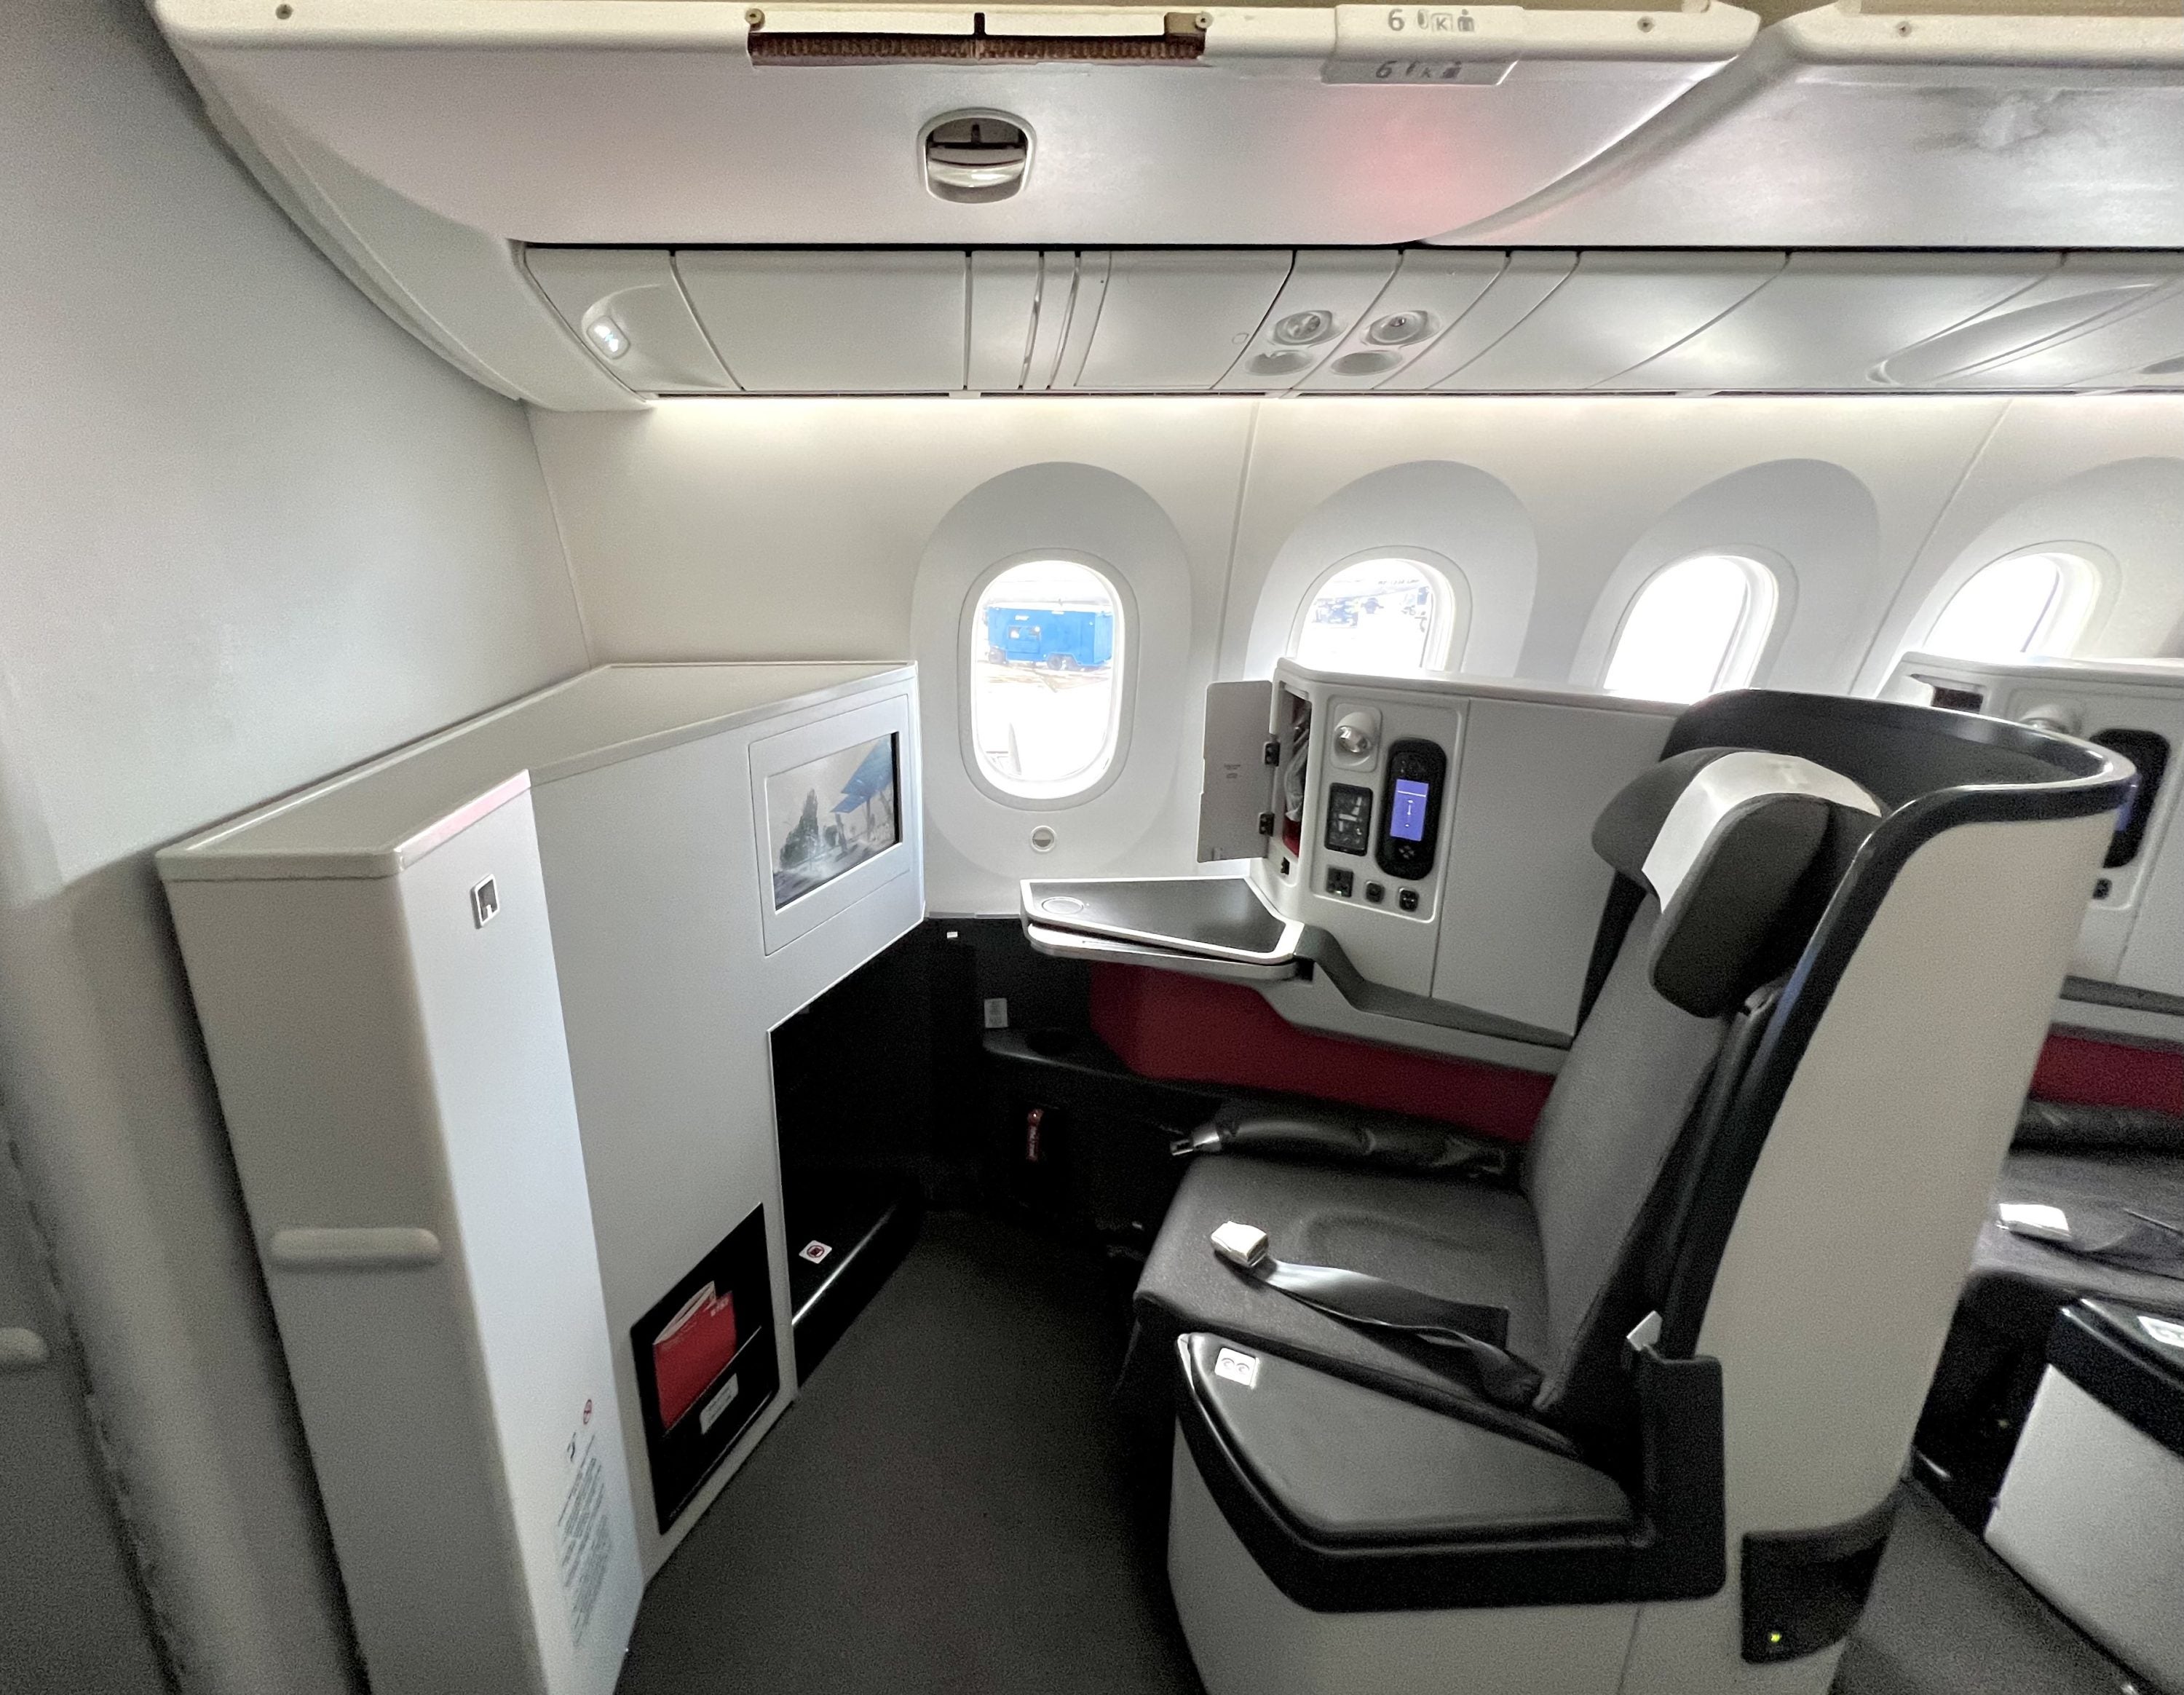 Avianca Boeing 787 Business Class seat 6K side view